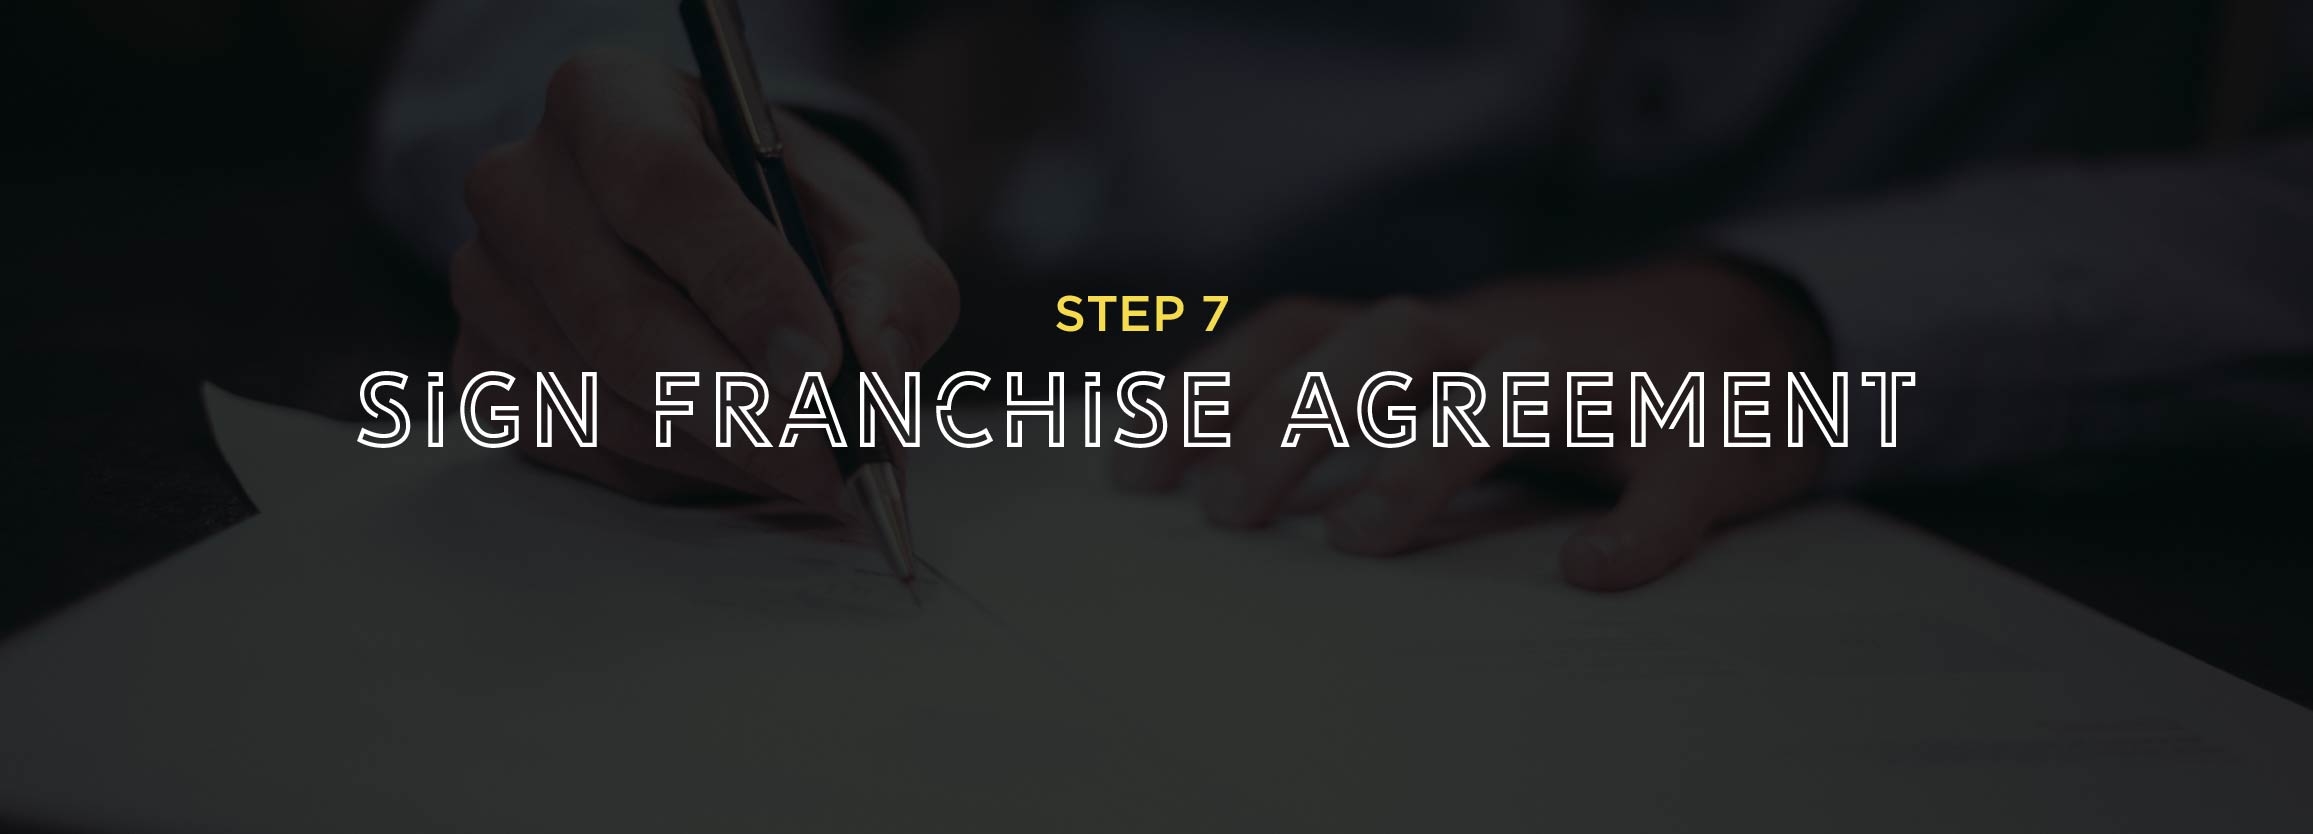 Step 7 - Sign franchise agreement